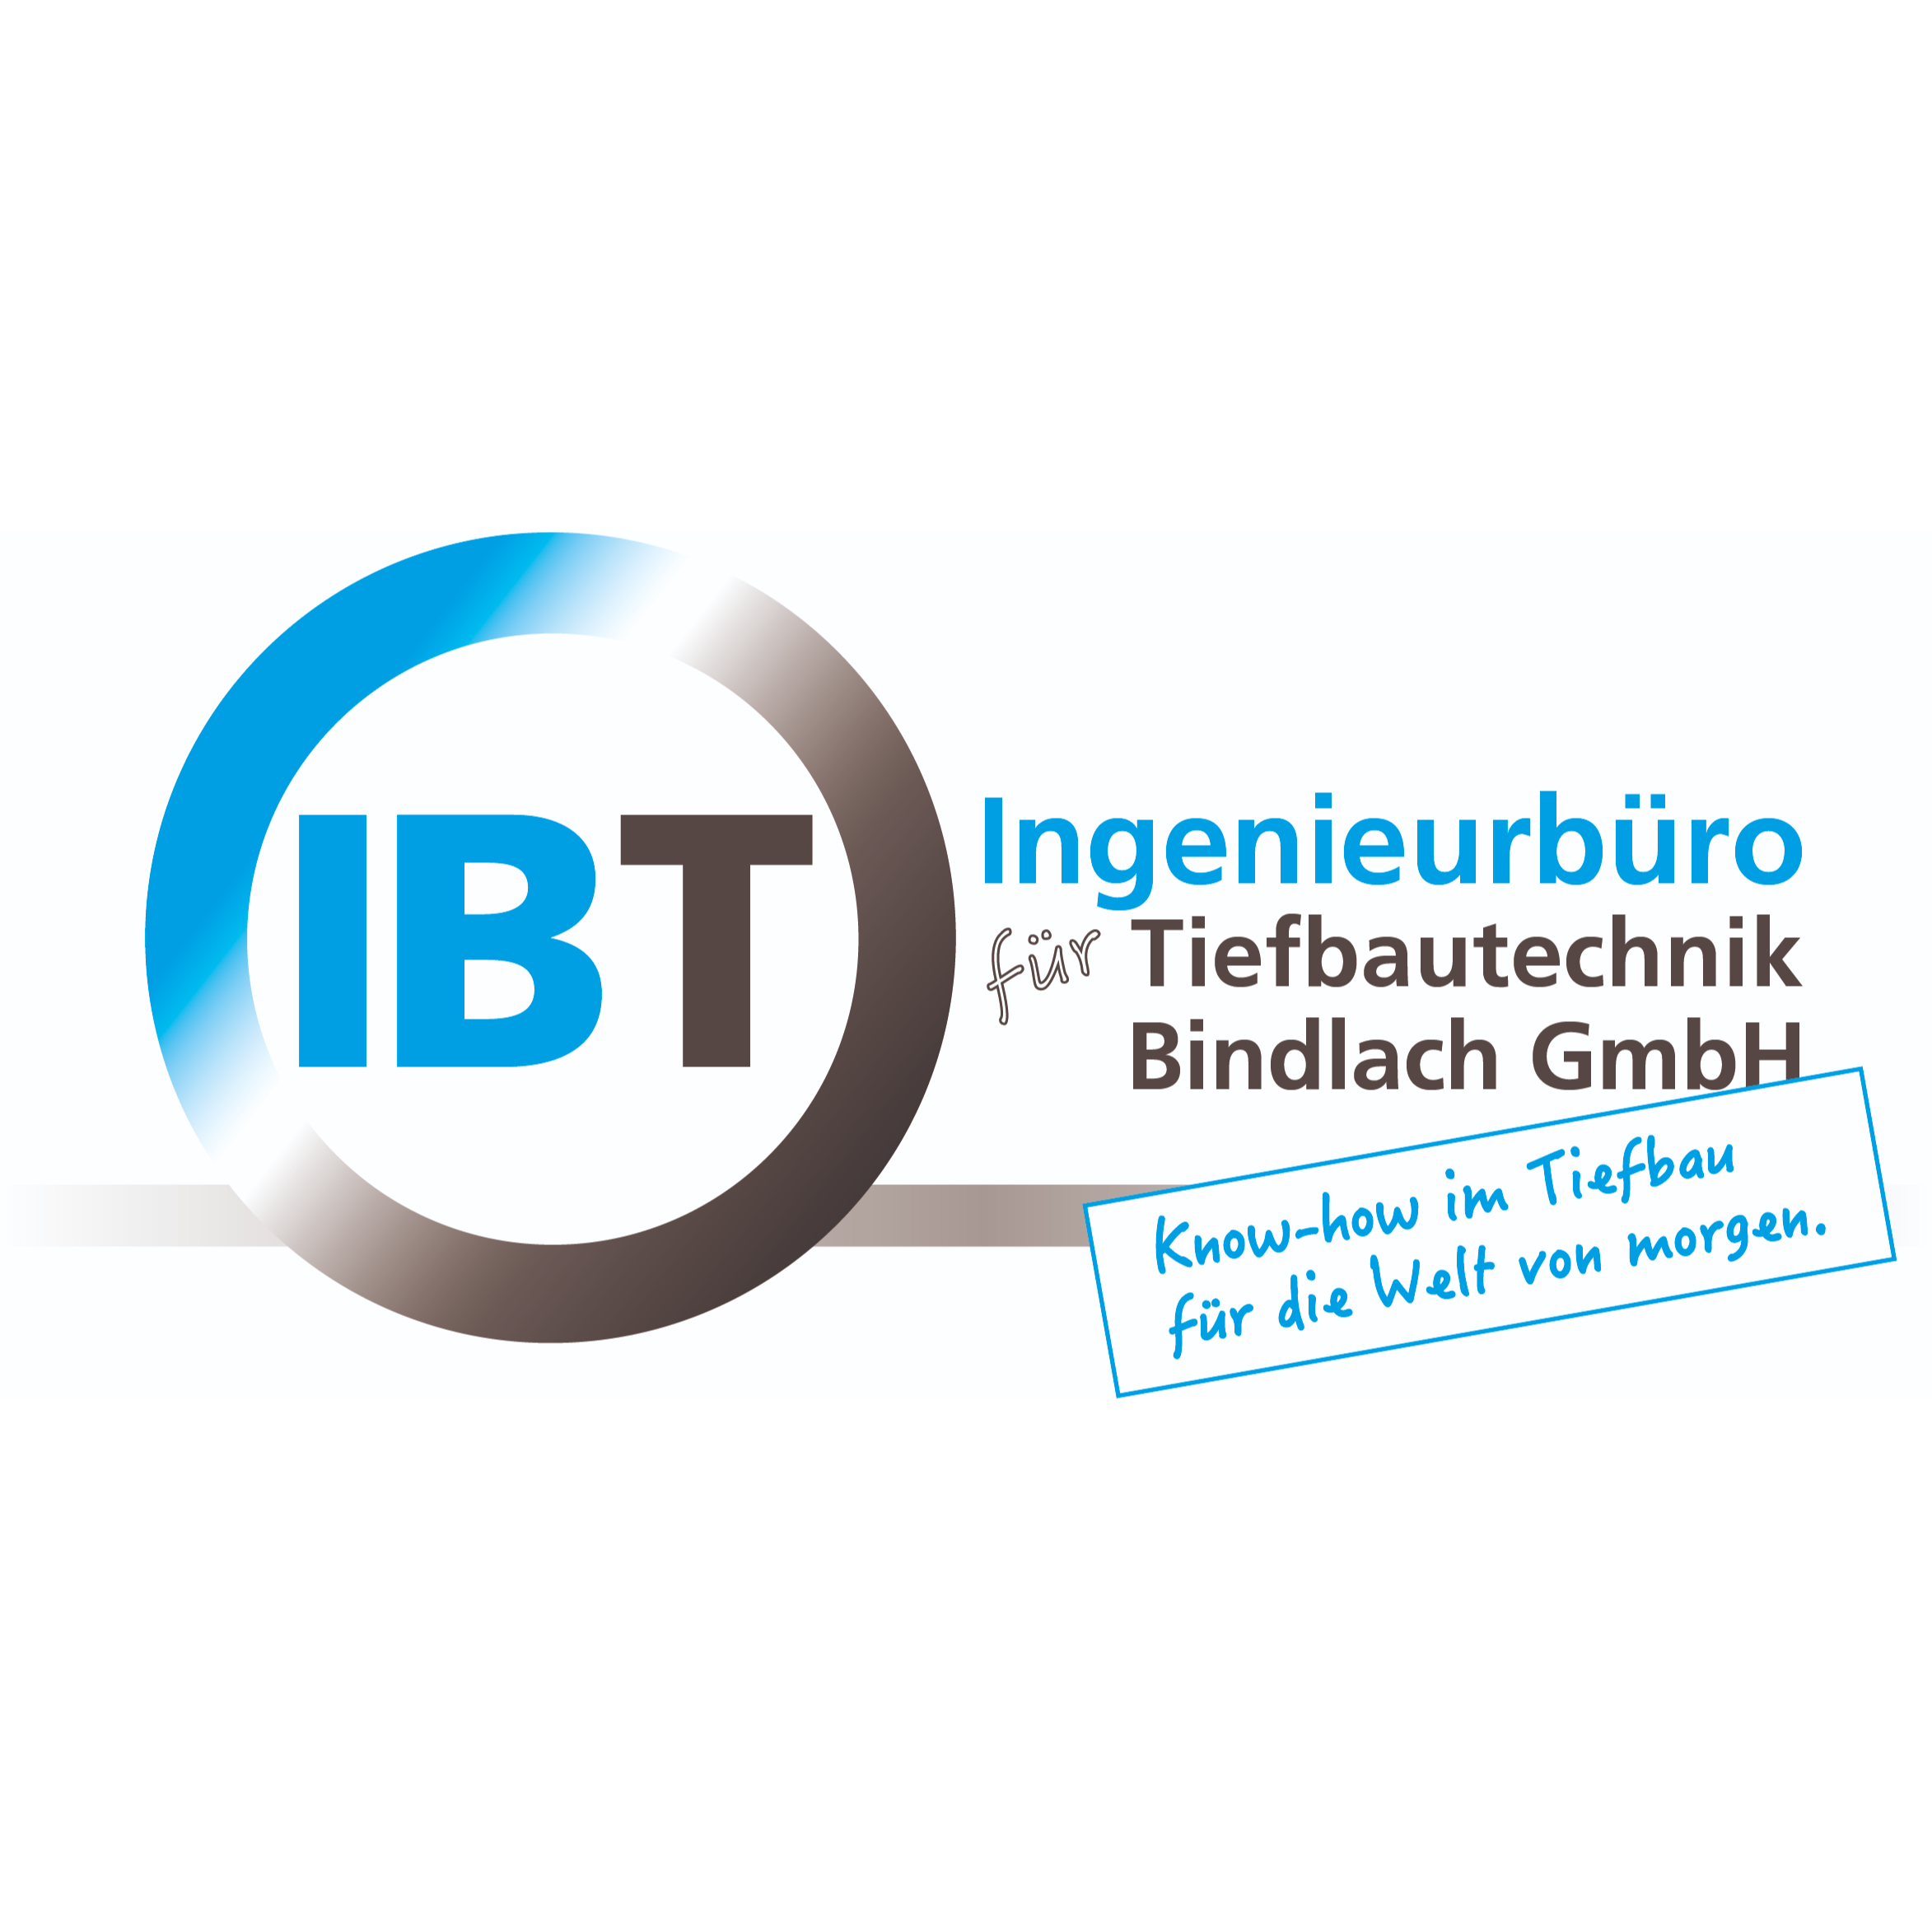 IBT - Ingenieurbüro für Tiefbautechnik Bindlach GmbH Logo